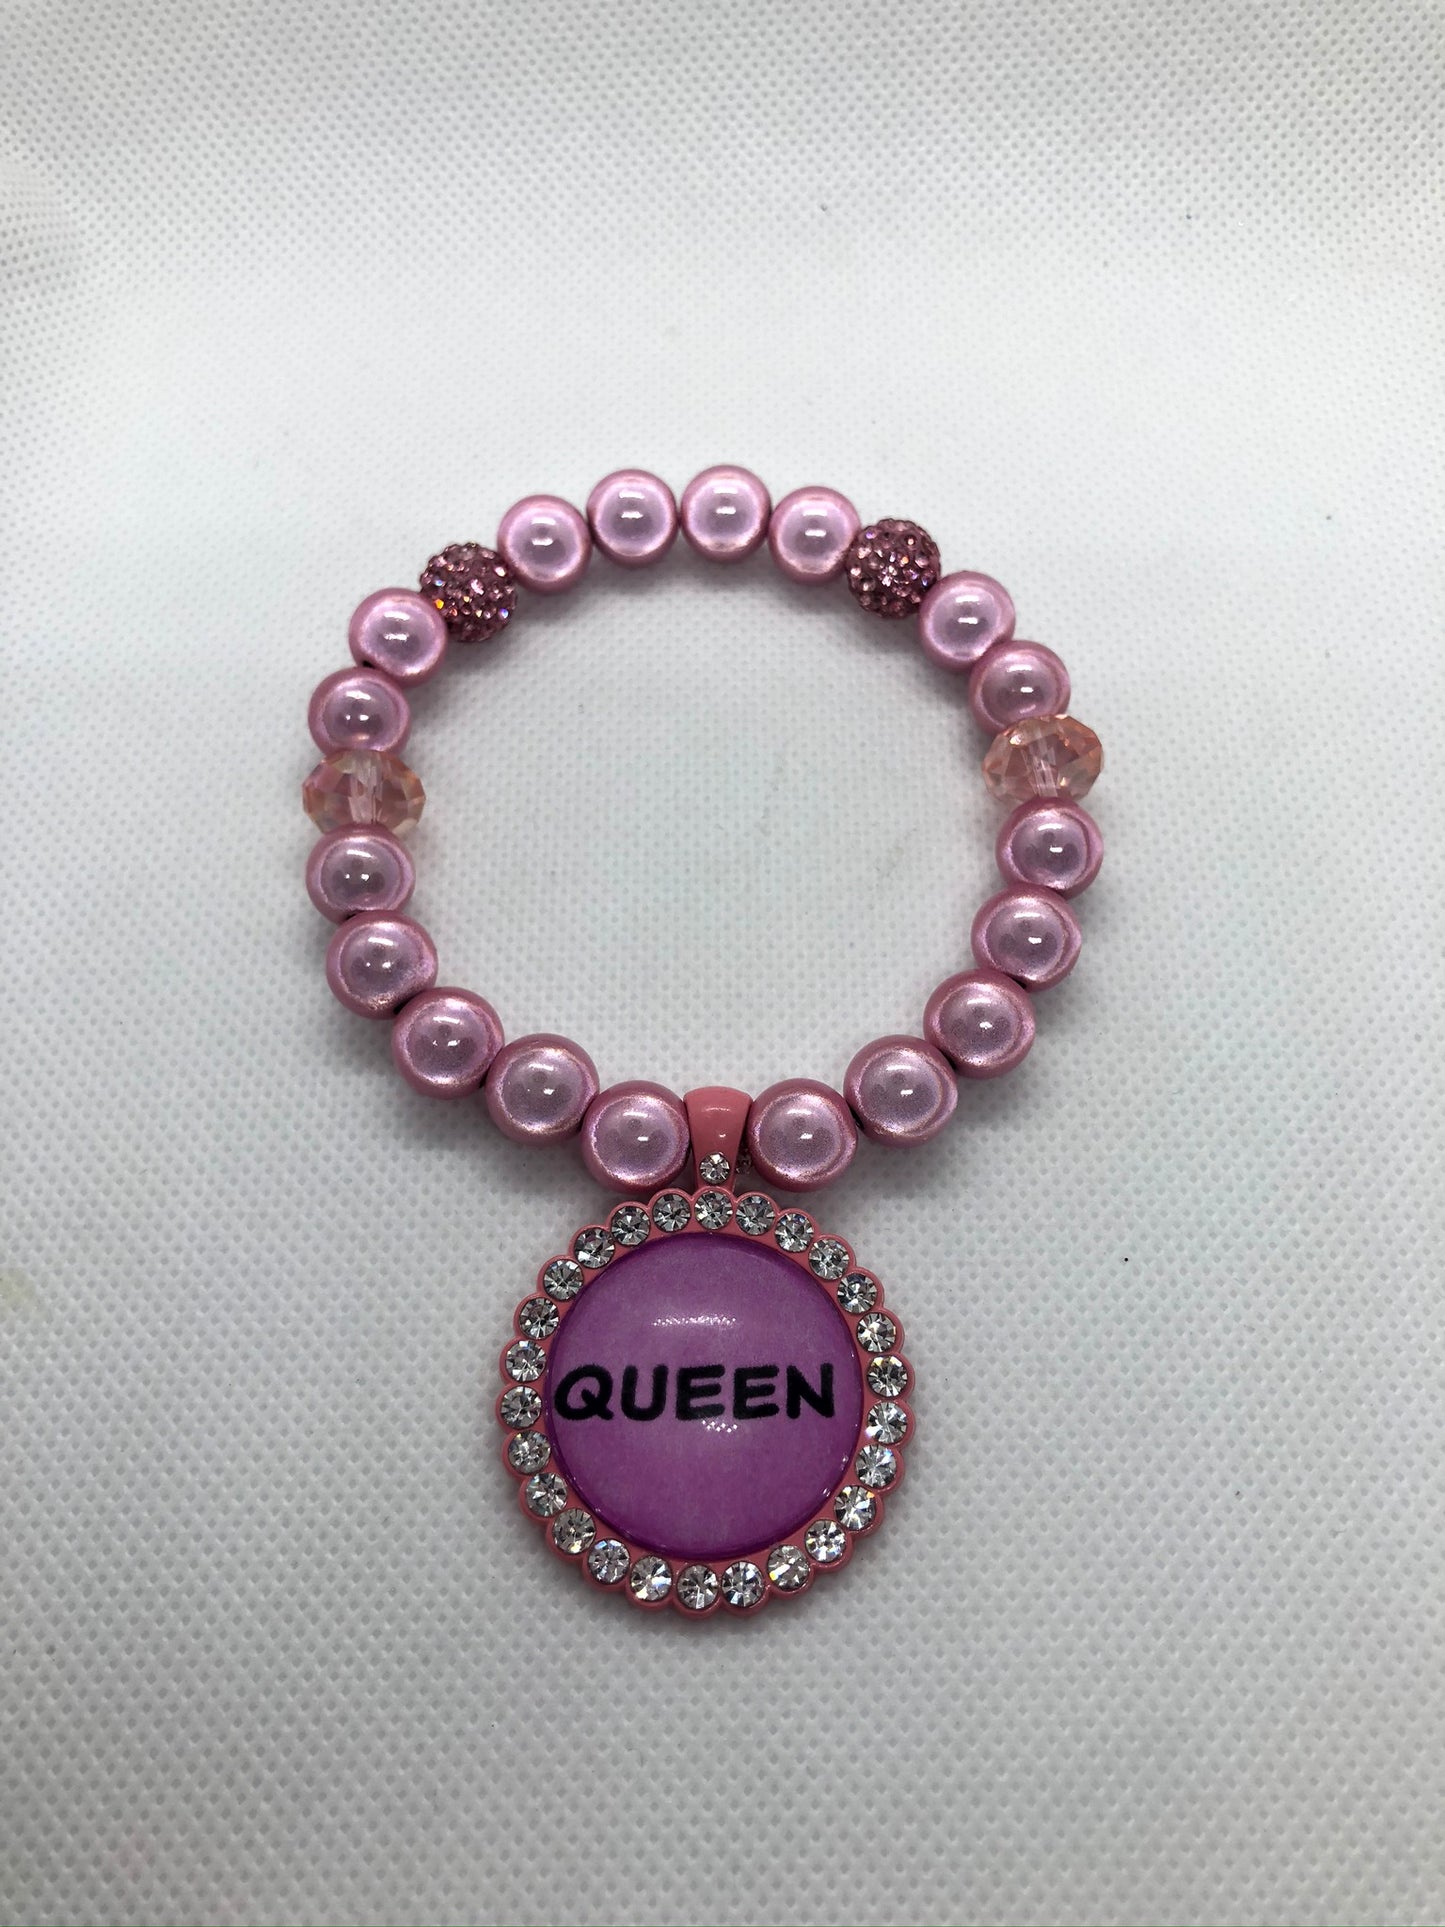 Stretchable Pink Beaded Charm Bracelet size 7